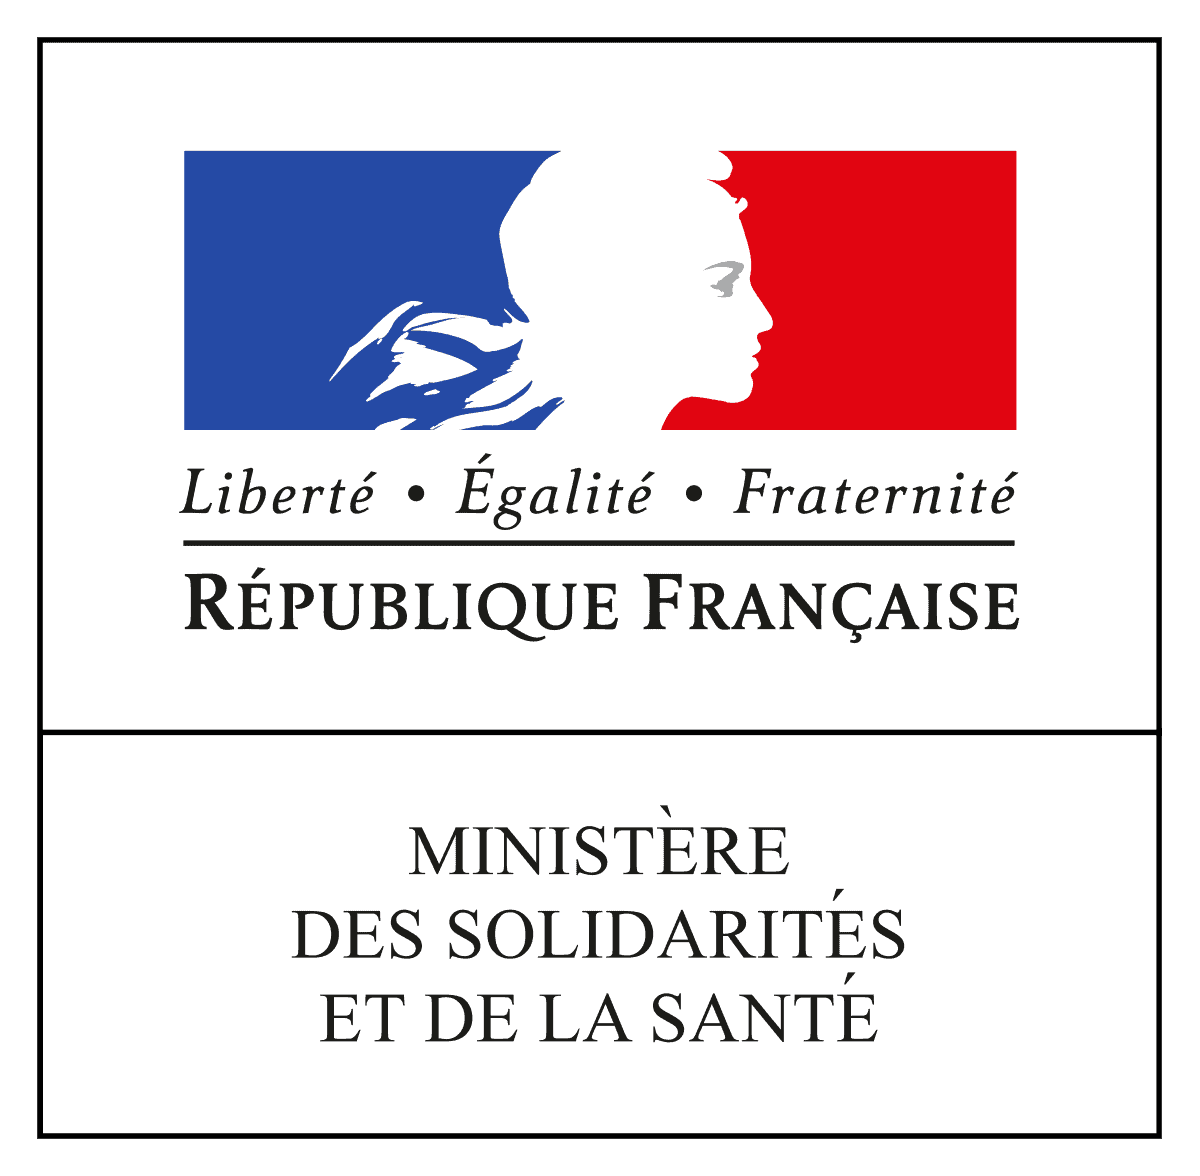 Ministère_des_Solidarités_et_de_la_Santé